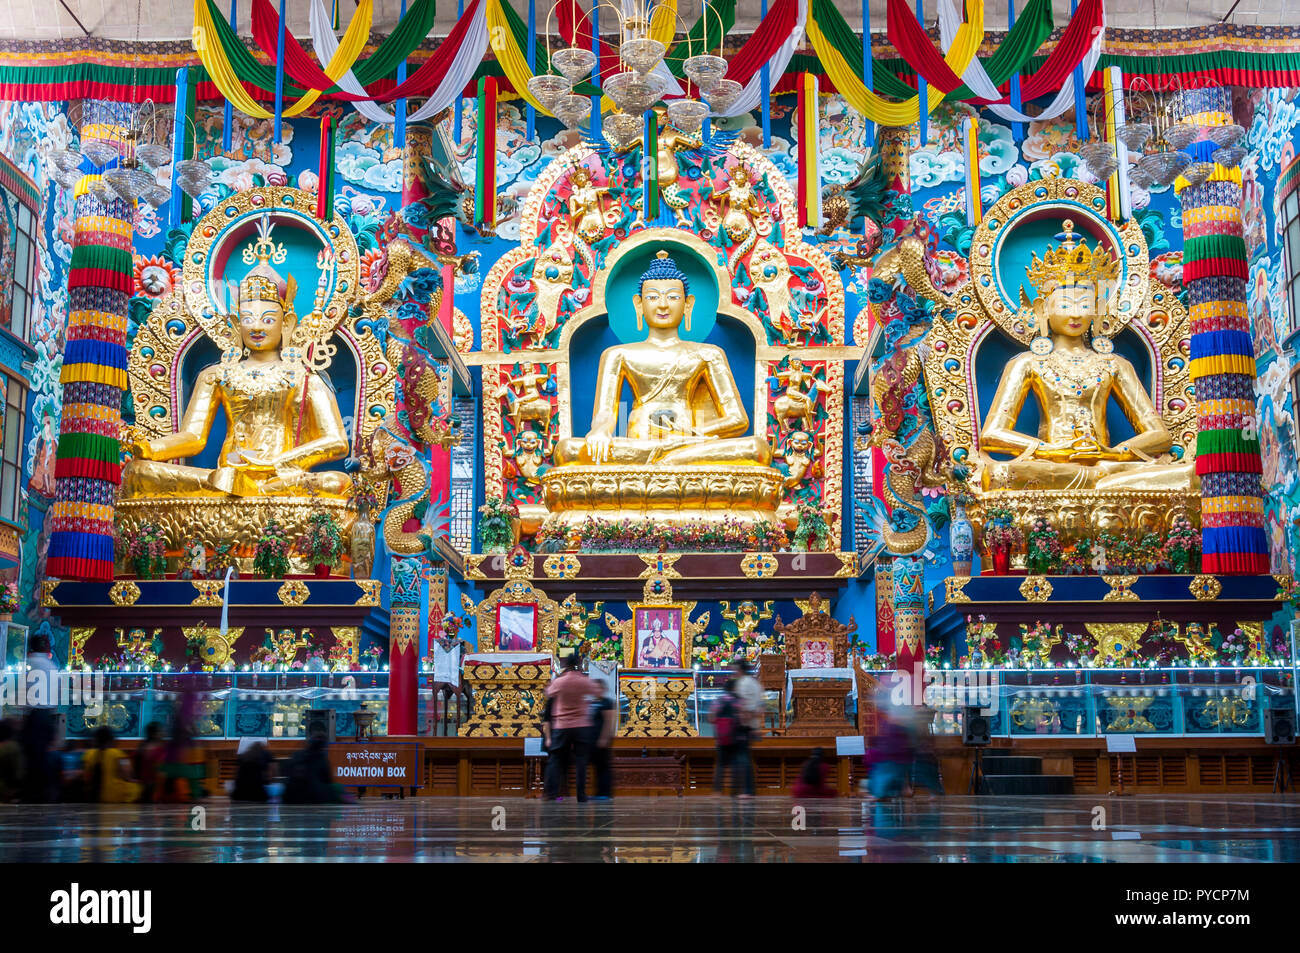 Bylakuppe, Karnataka, Indien - Januar 9, 2015: 18 Meter hohen Statuen im Inneren des goldenen Tempels - Padmasmbhava, Buddha und Amitayus. Stockfoto